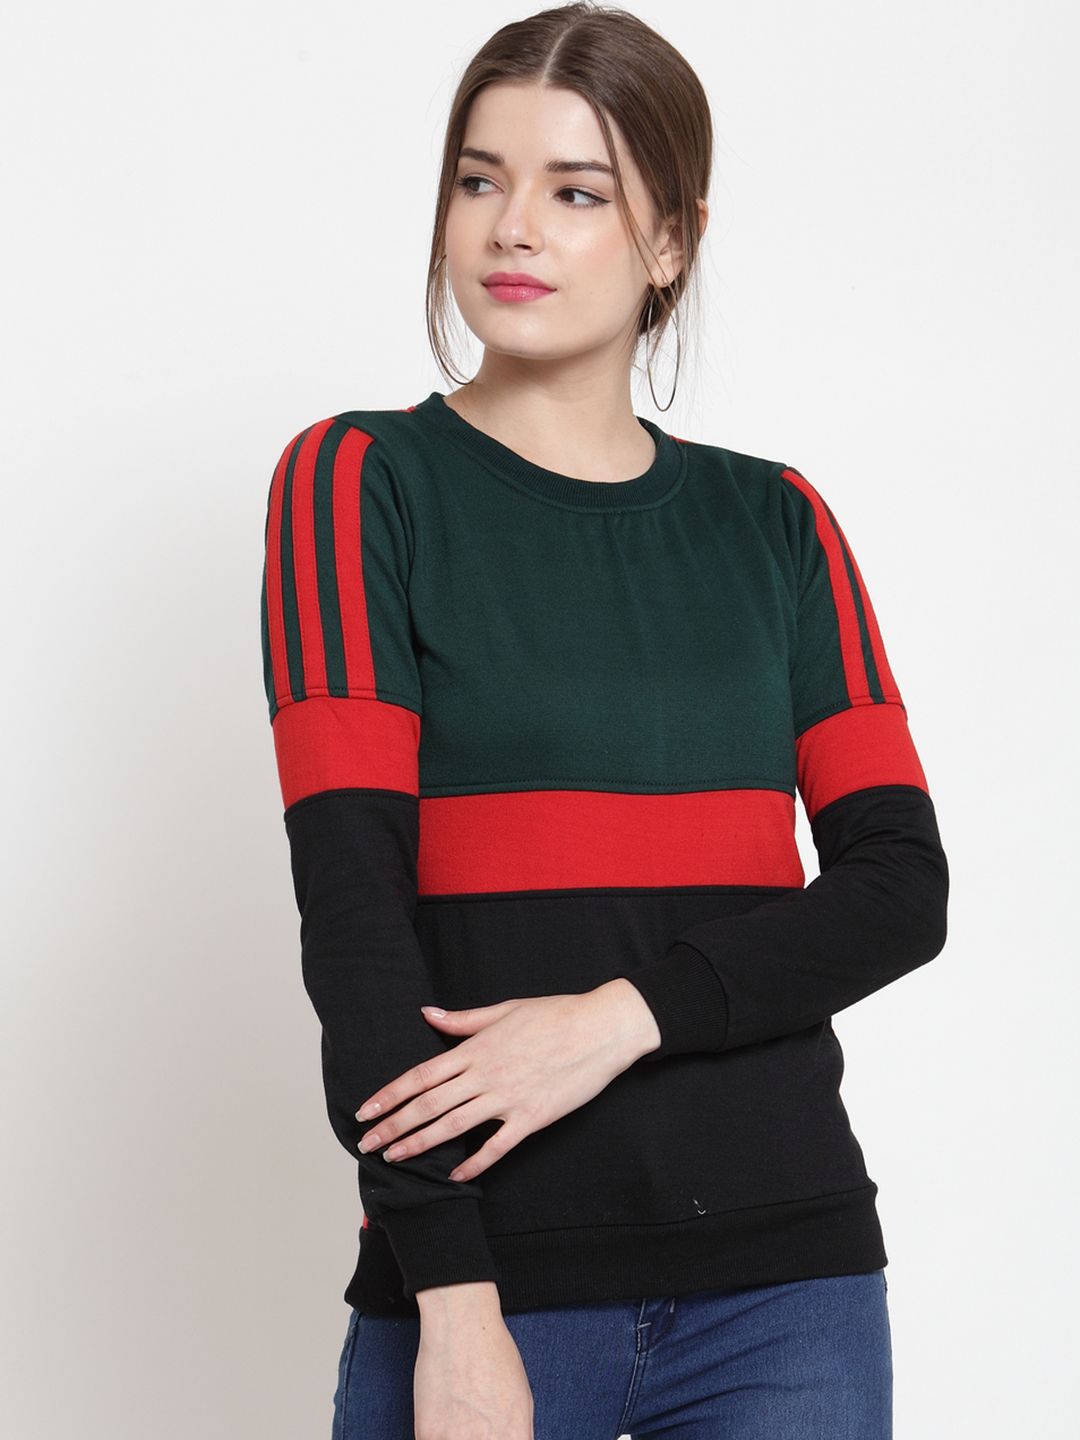 Belle Fille Women Green & Red Colourblocked Sweatshirt Price in India